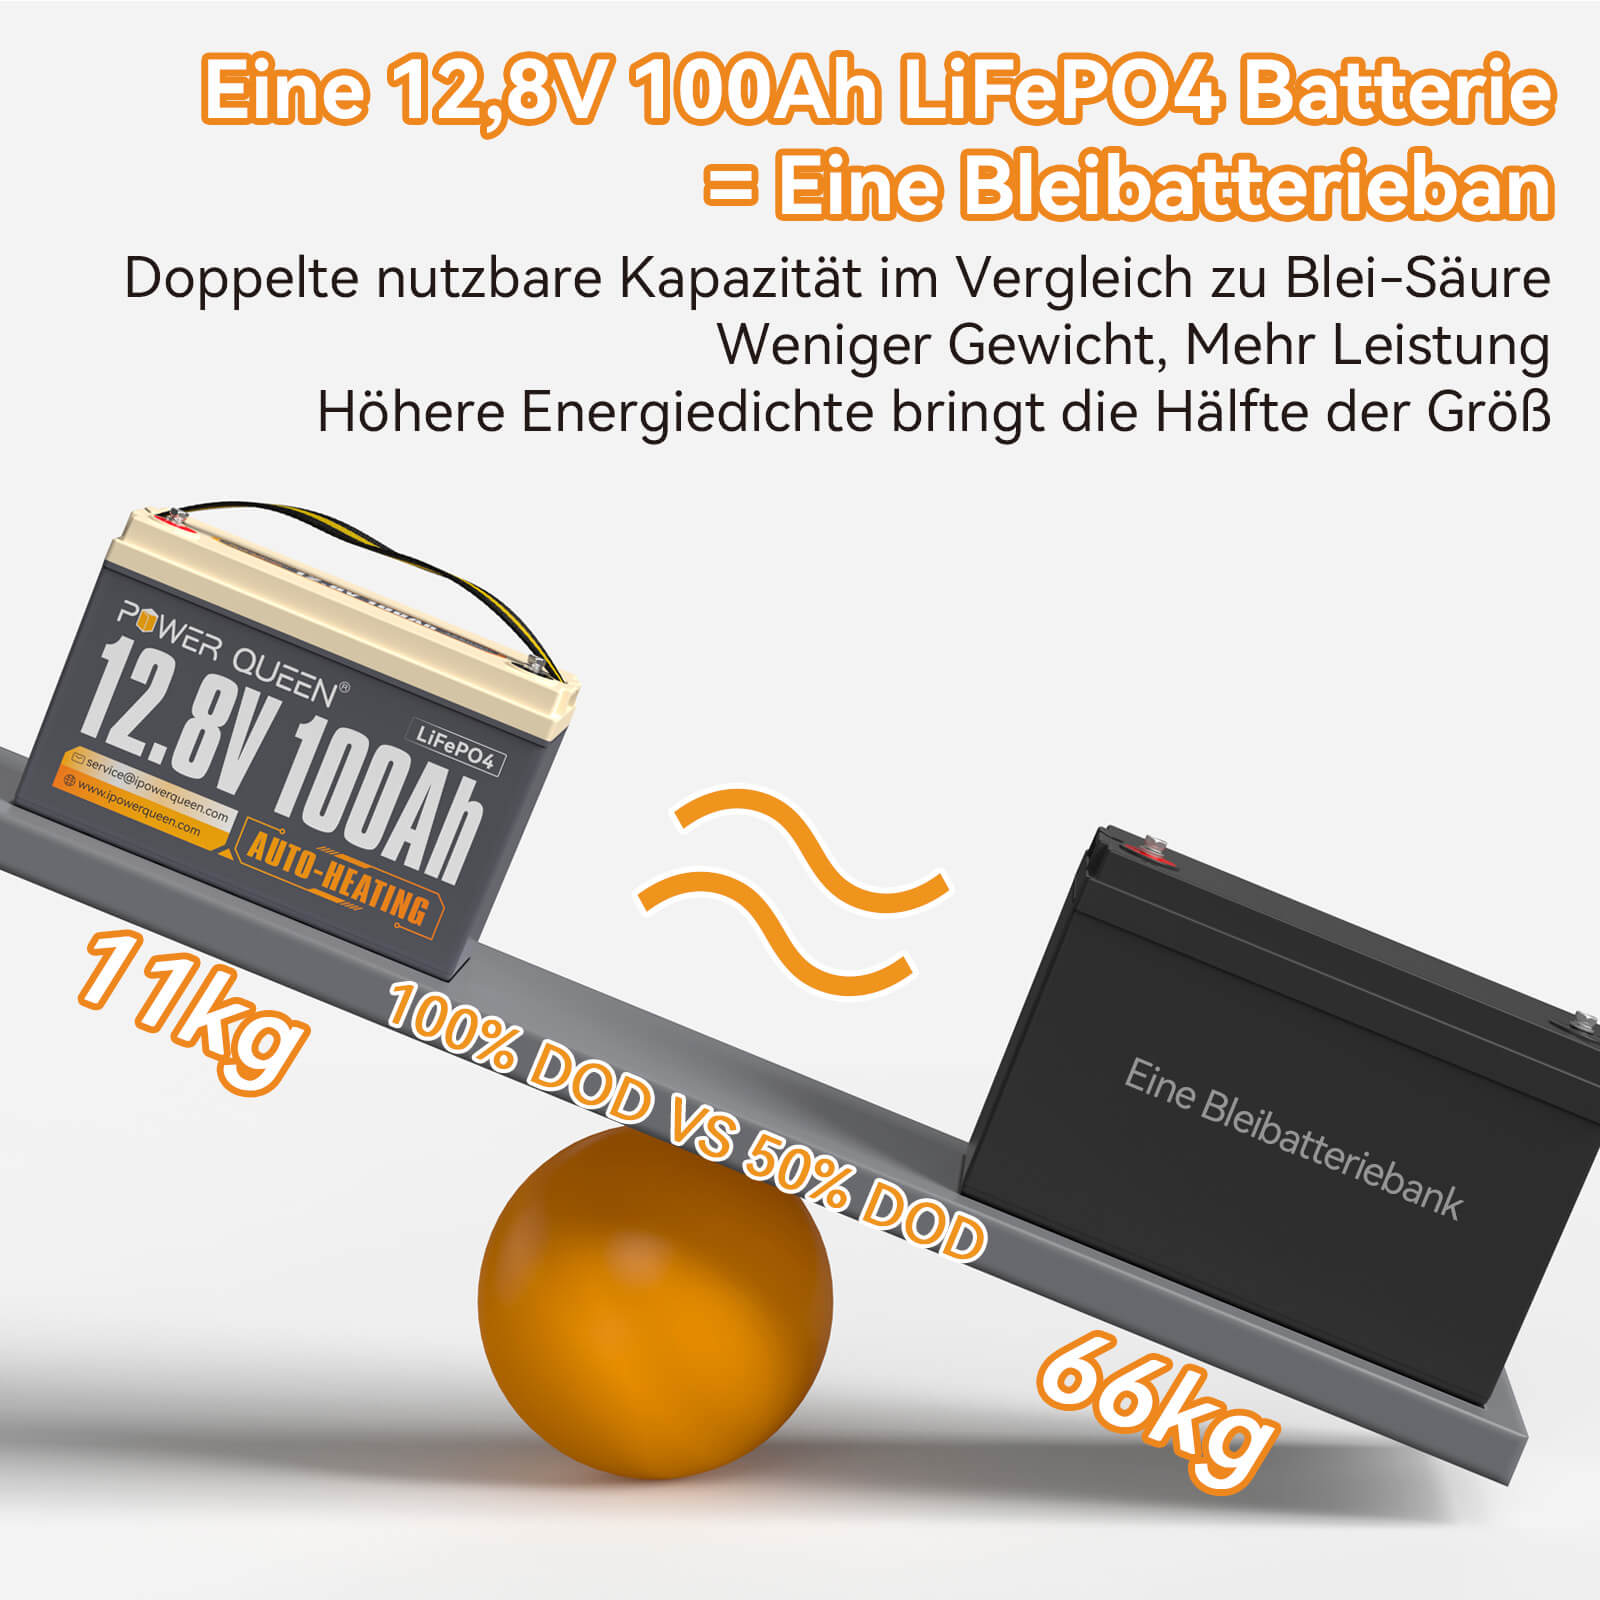 Come nuovo: batteria LiFePO4 autoriscaldante Power Queen 12,8 V 100 Ah, BMS 100 A integrato